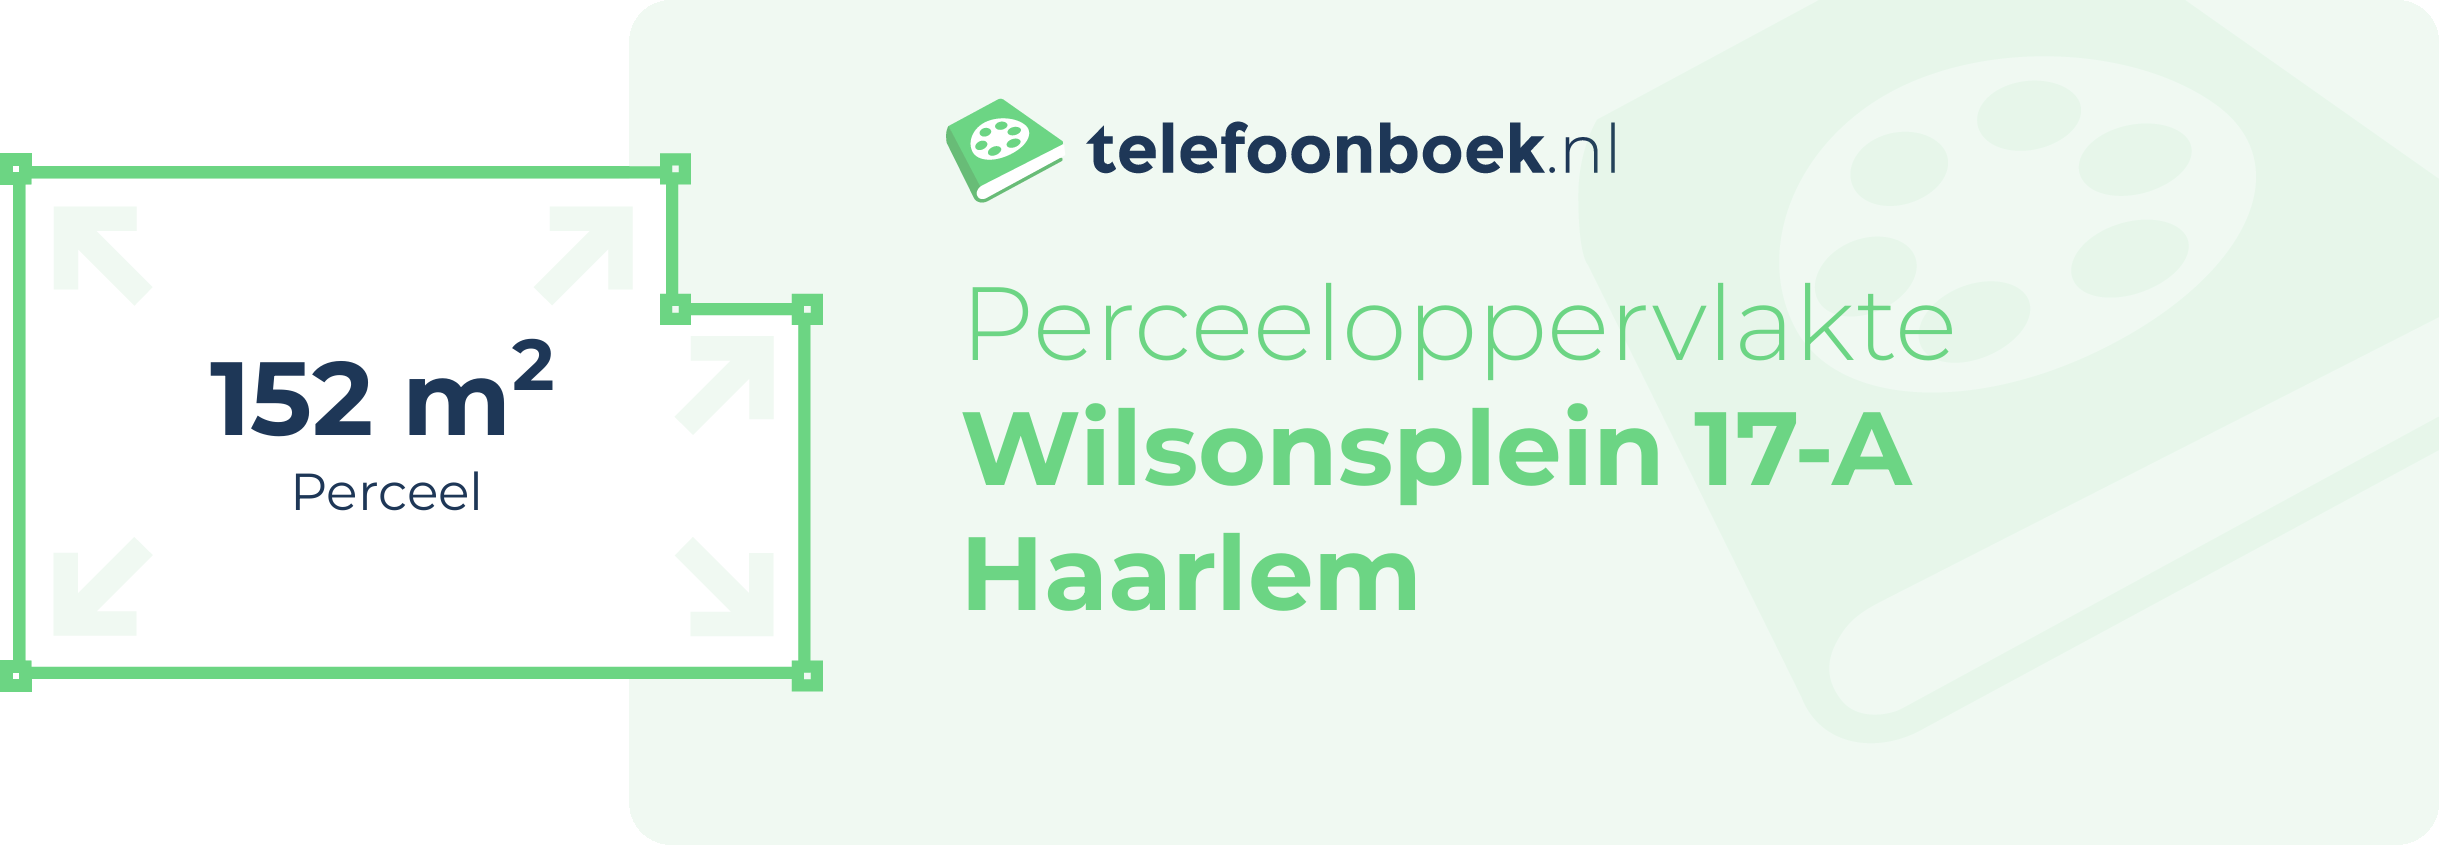 Perceeloppervlakte Wilsonsplein 17-A Haarlem